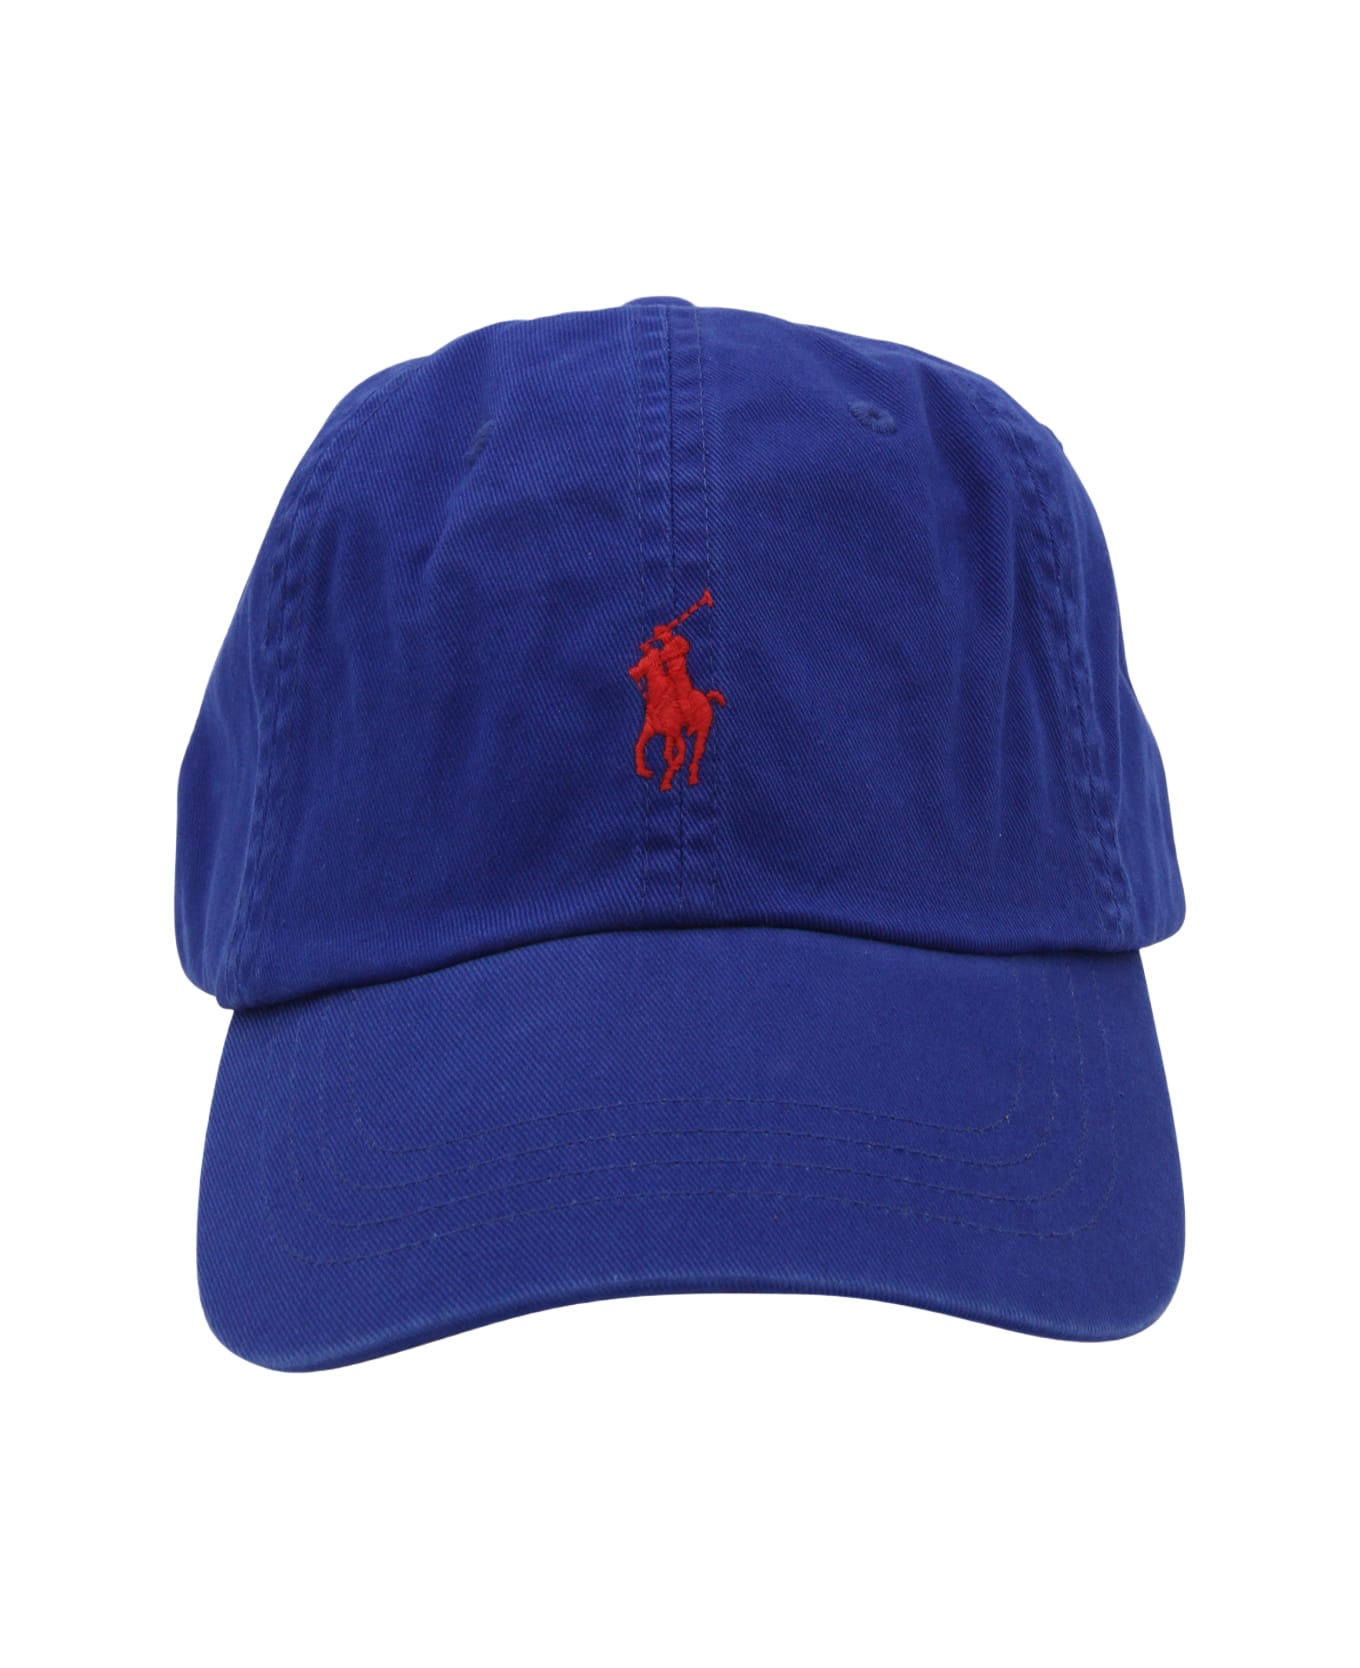 Polo Ralph Lauren Royal Blue And Red Cotton Baseball Cap - HERITAGE ROYAL 帽子